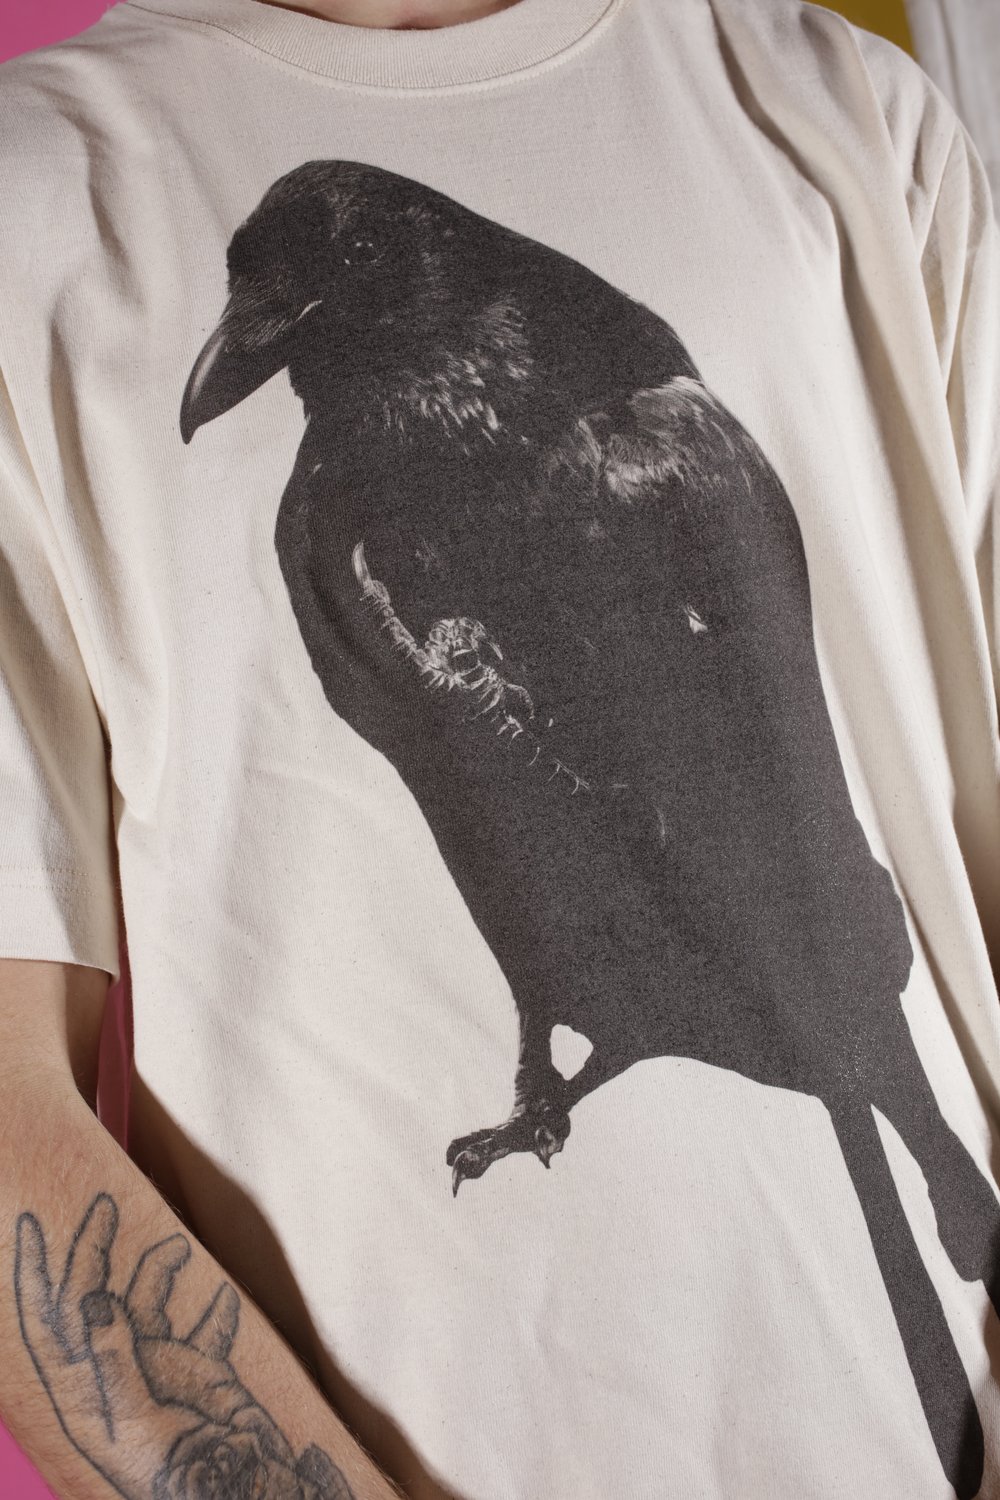 The Crow (saying fuck you too)